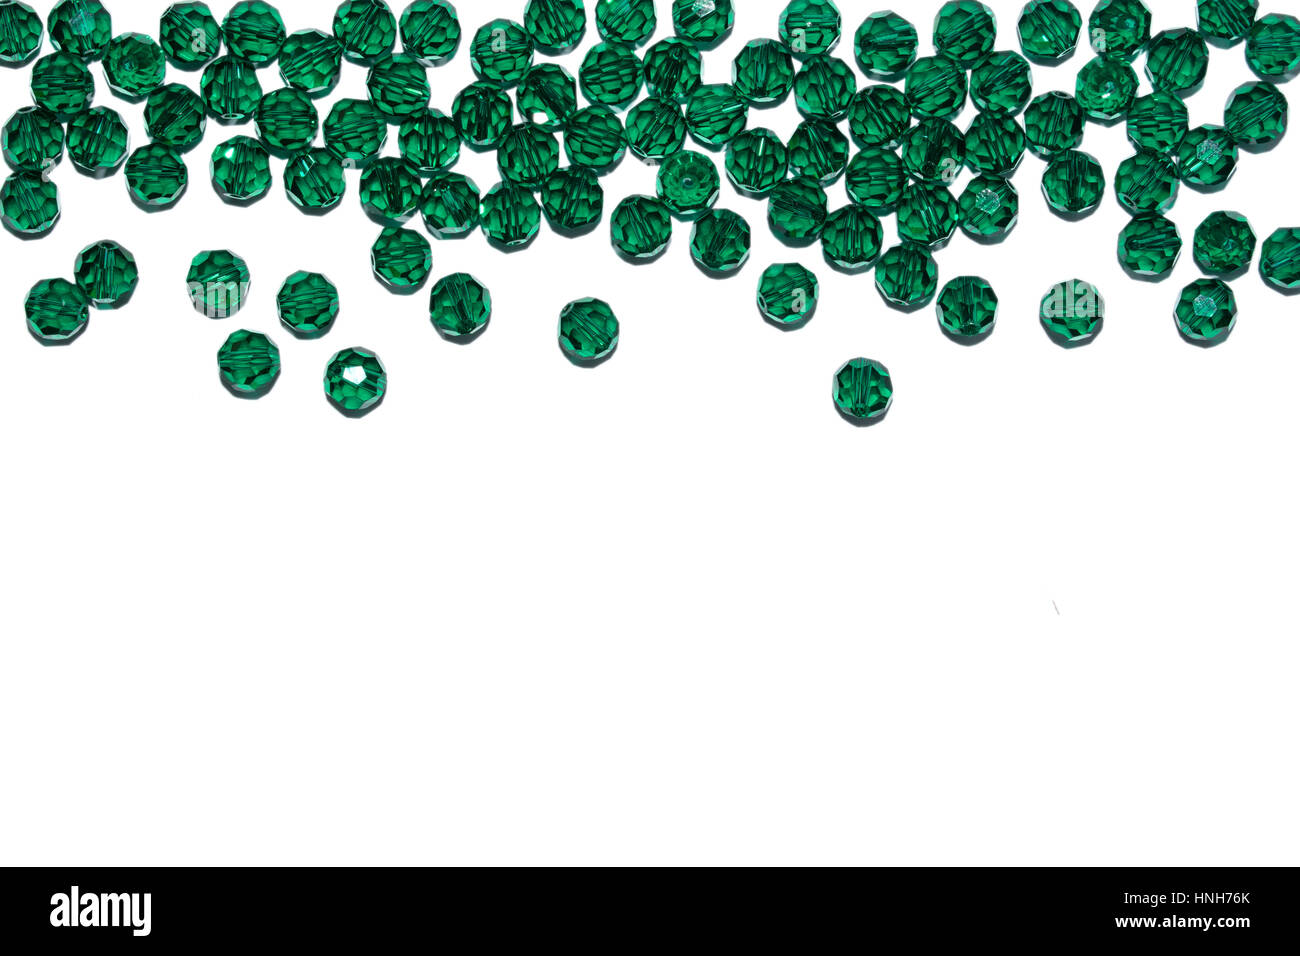 New Year's border. Christmas decor. Green glass beads Stock Photo